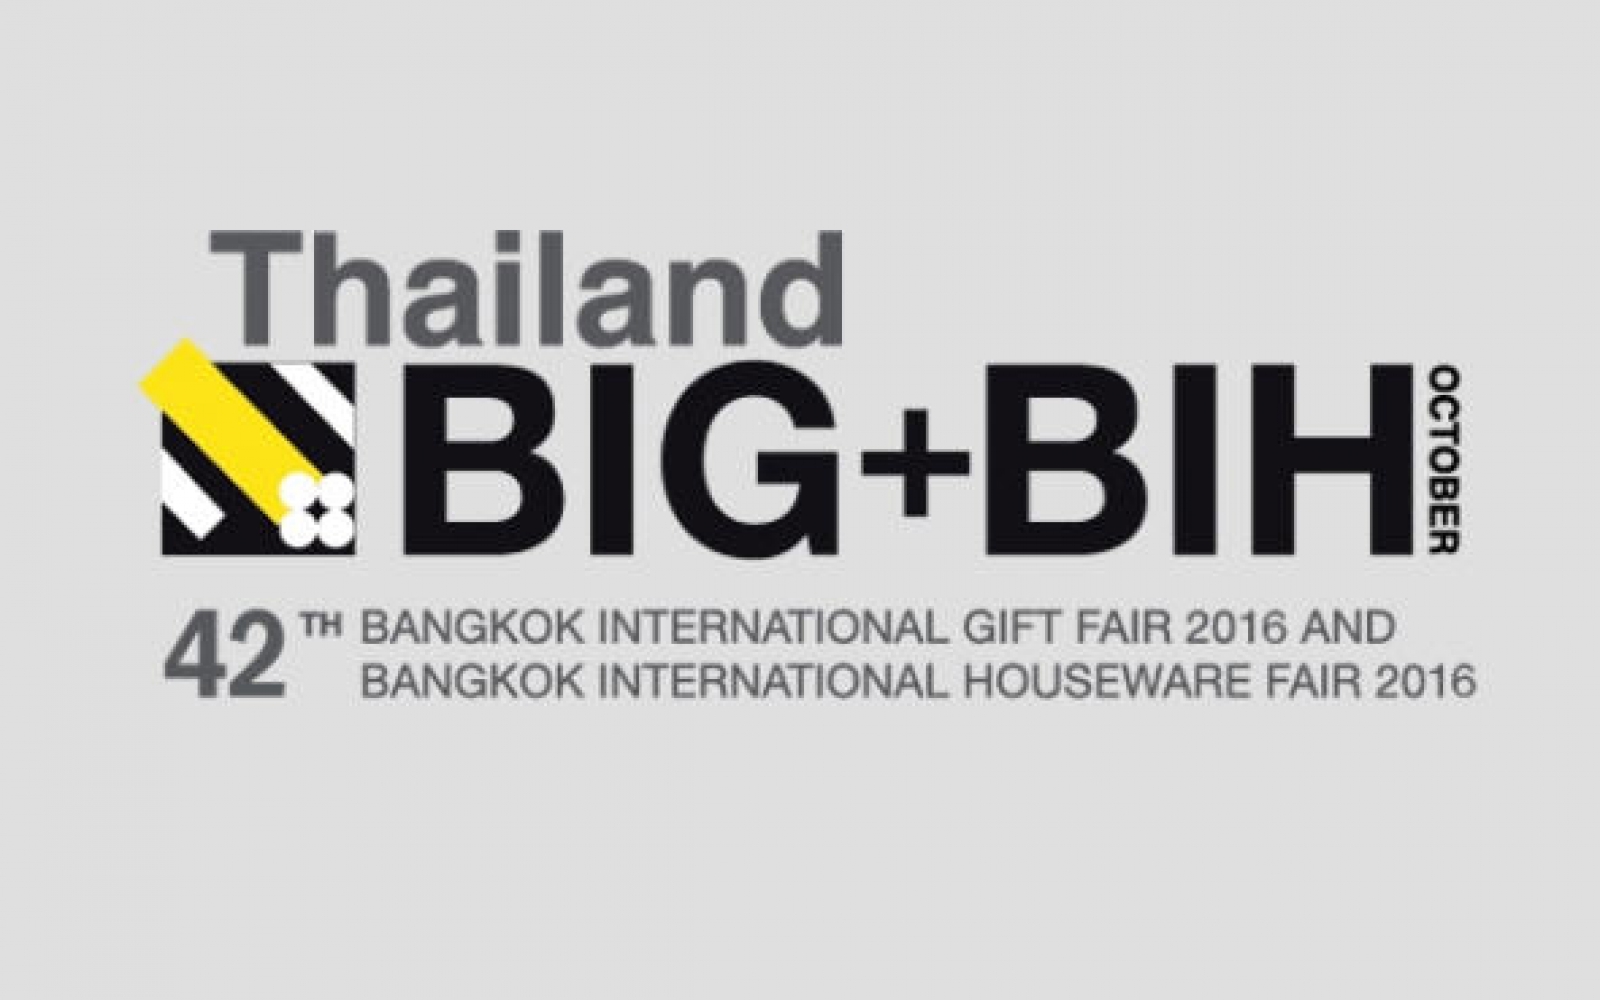 Thailand BIG+BIH 2016